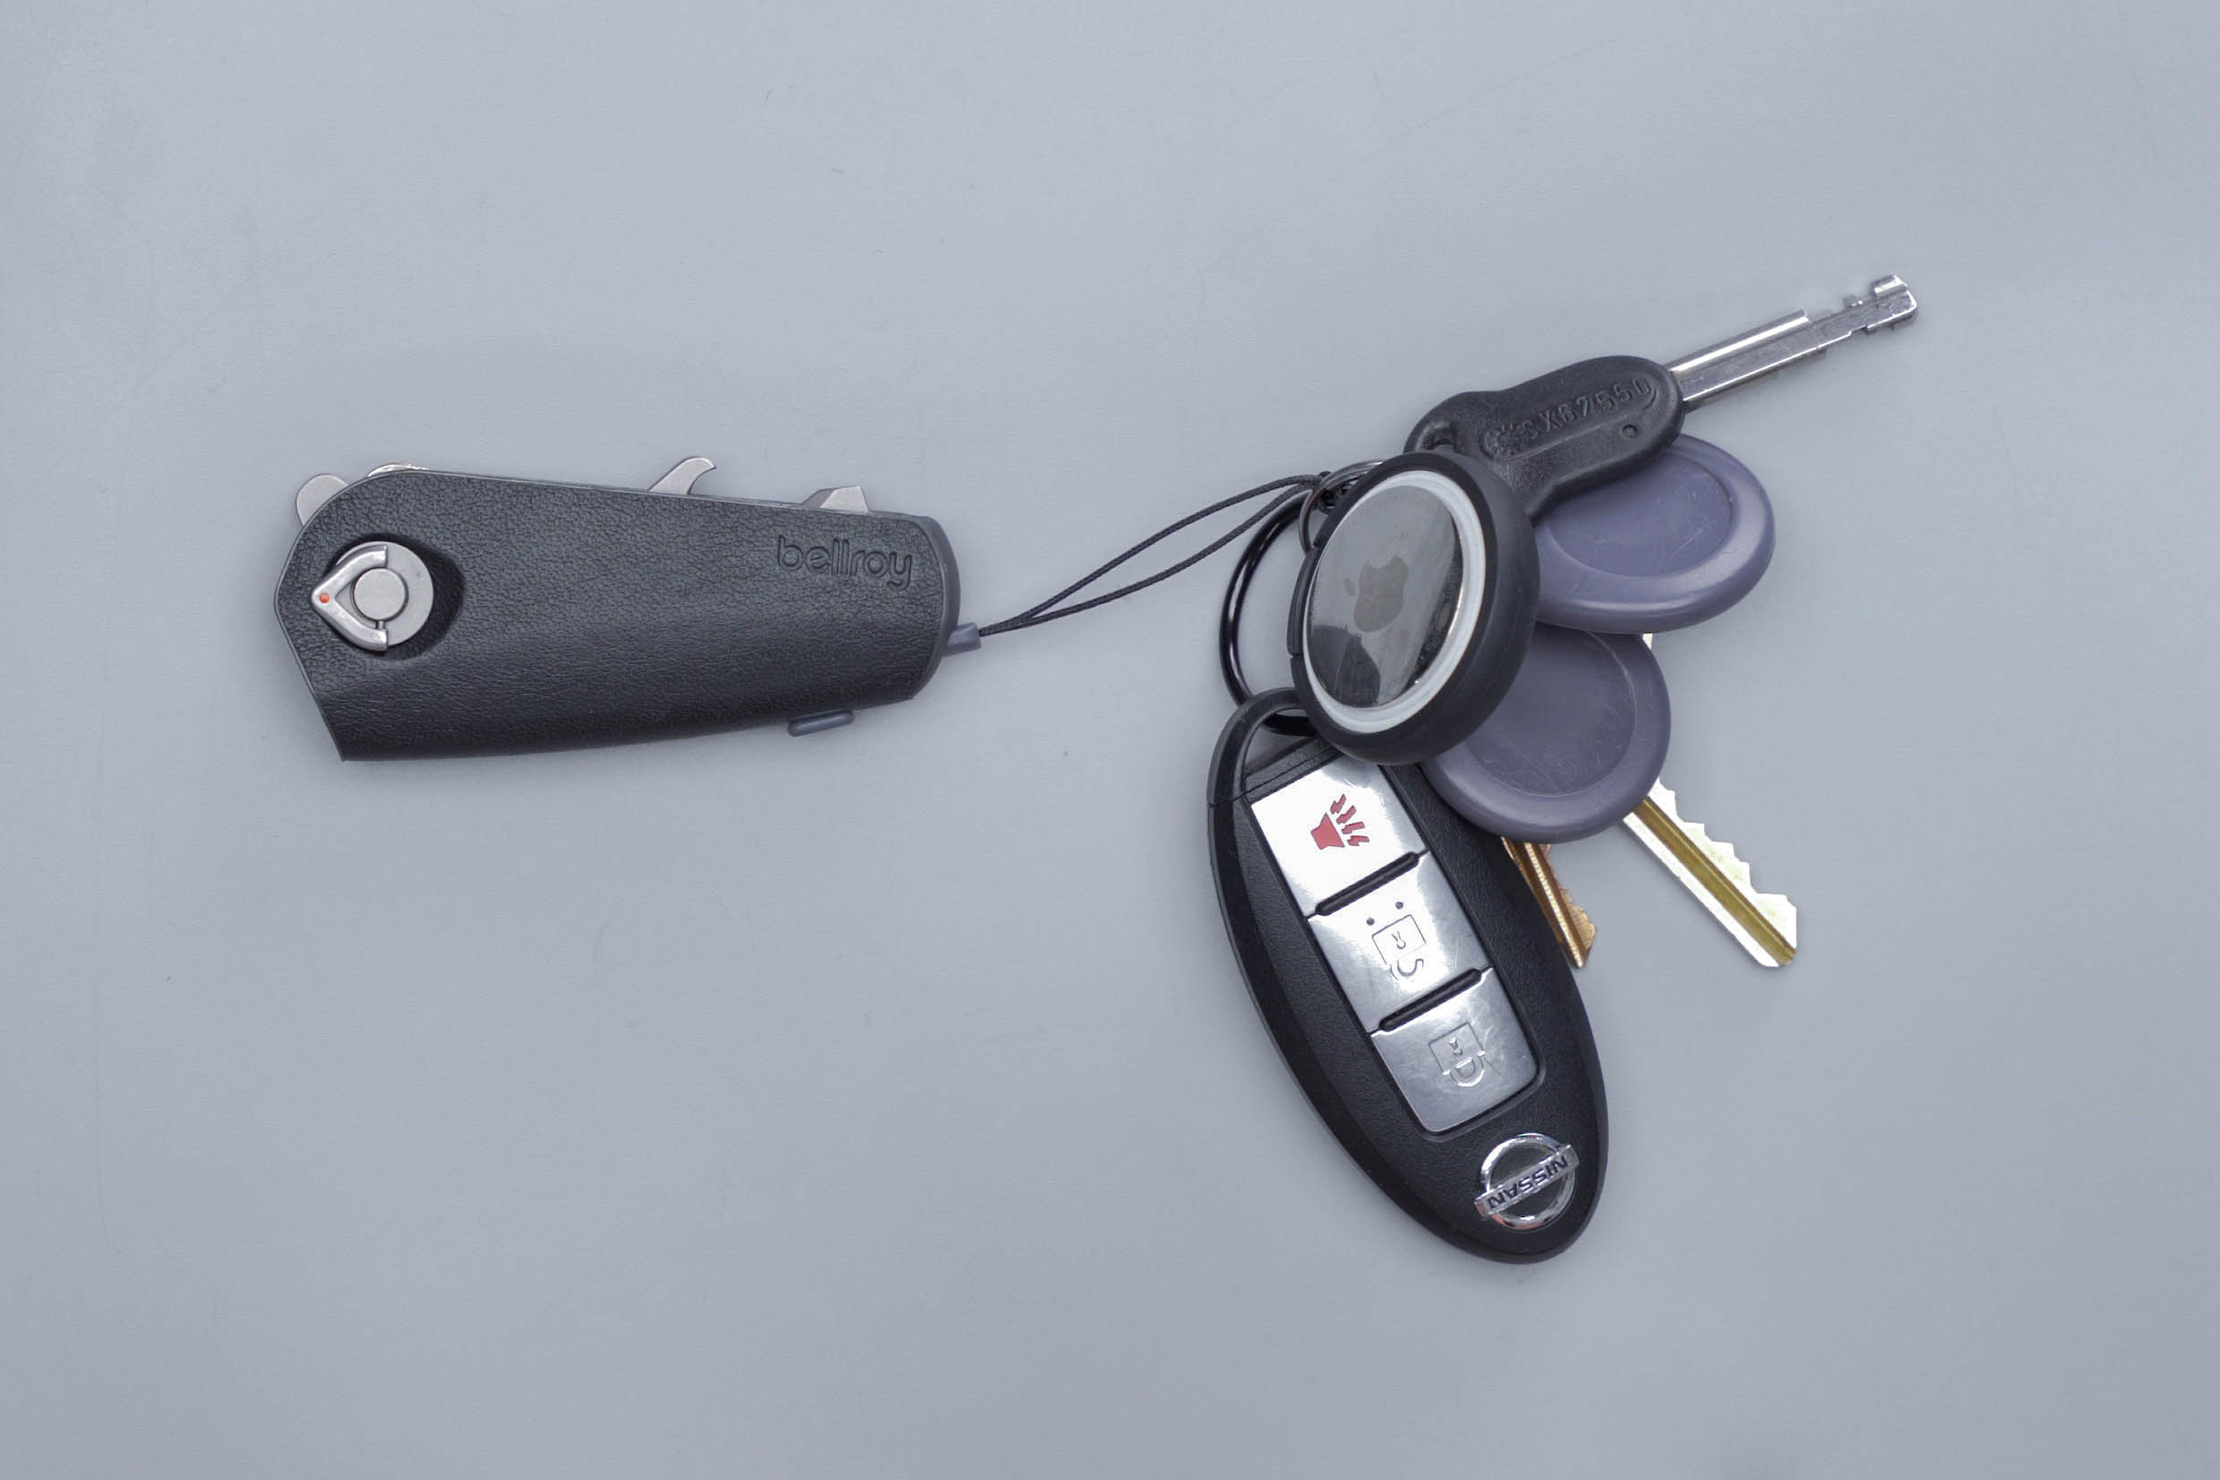 Bellroy Key Case With Keys